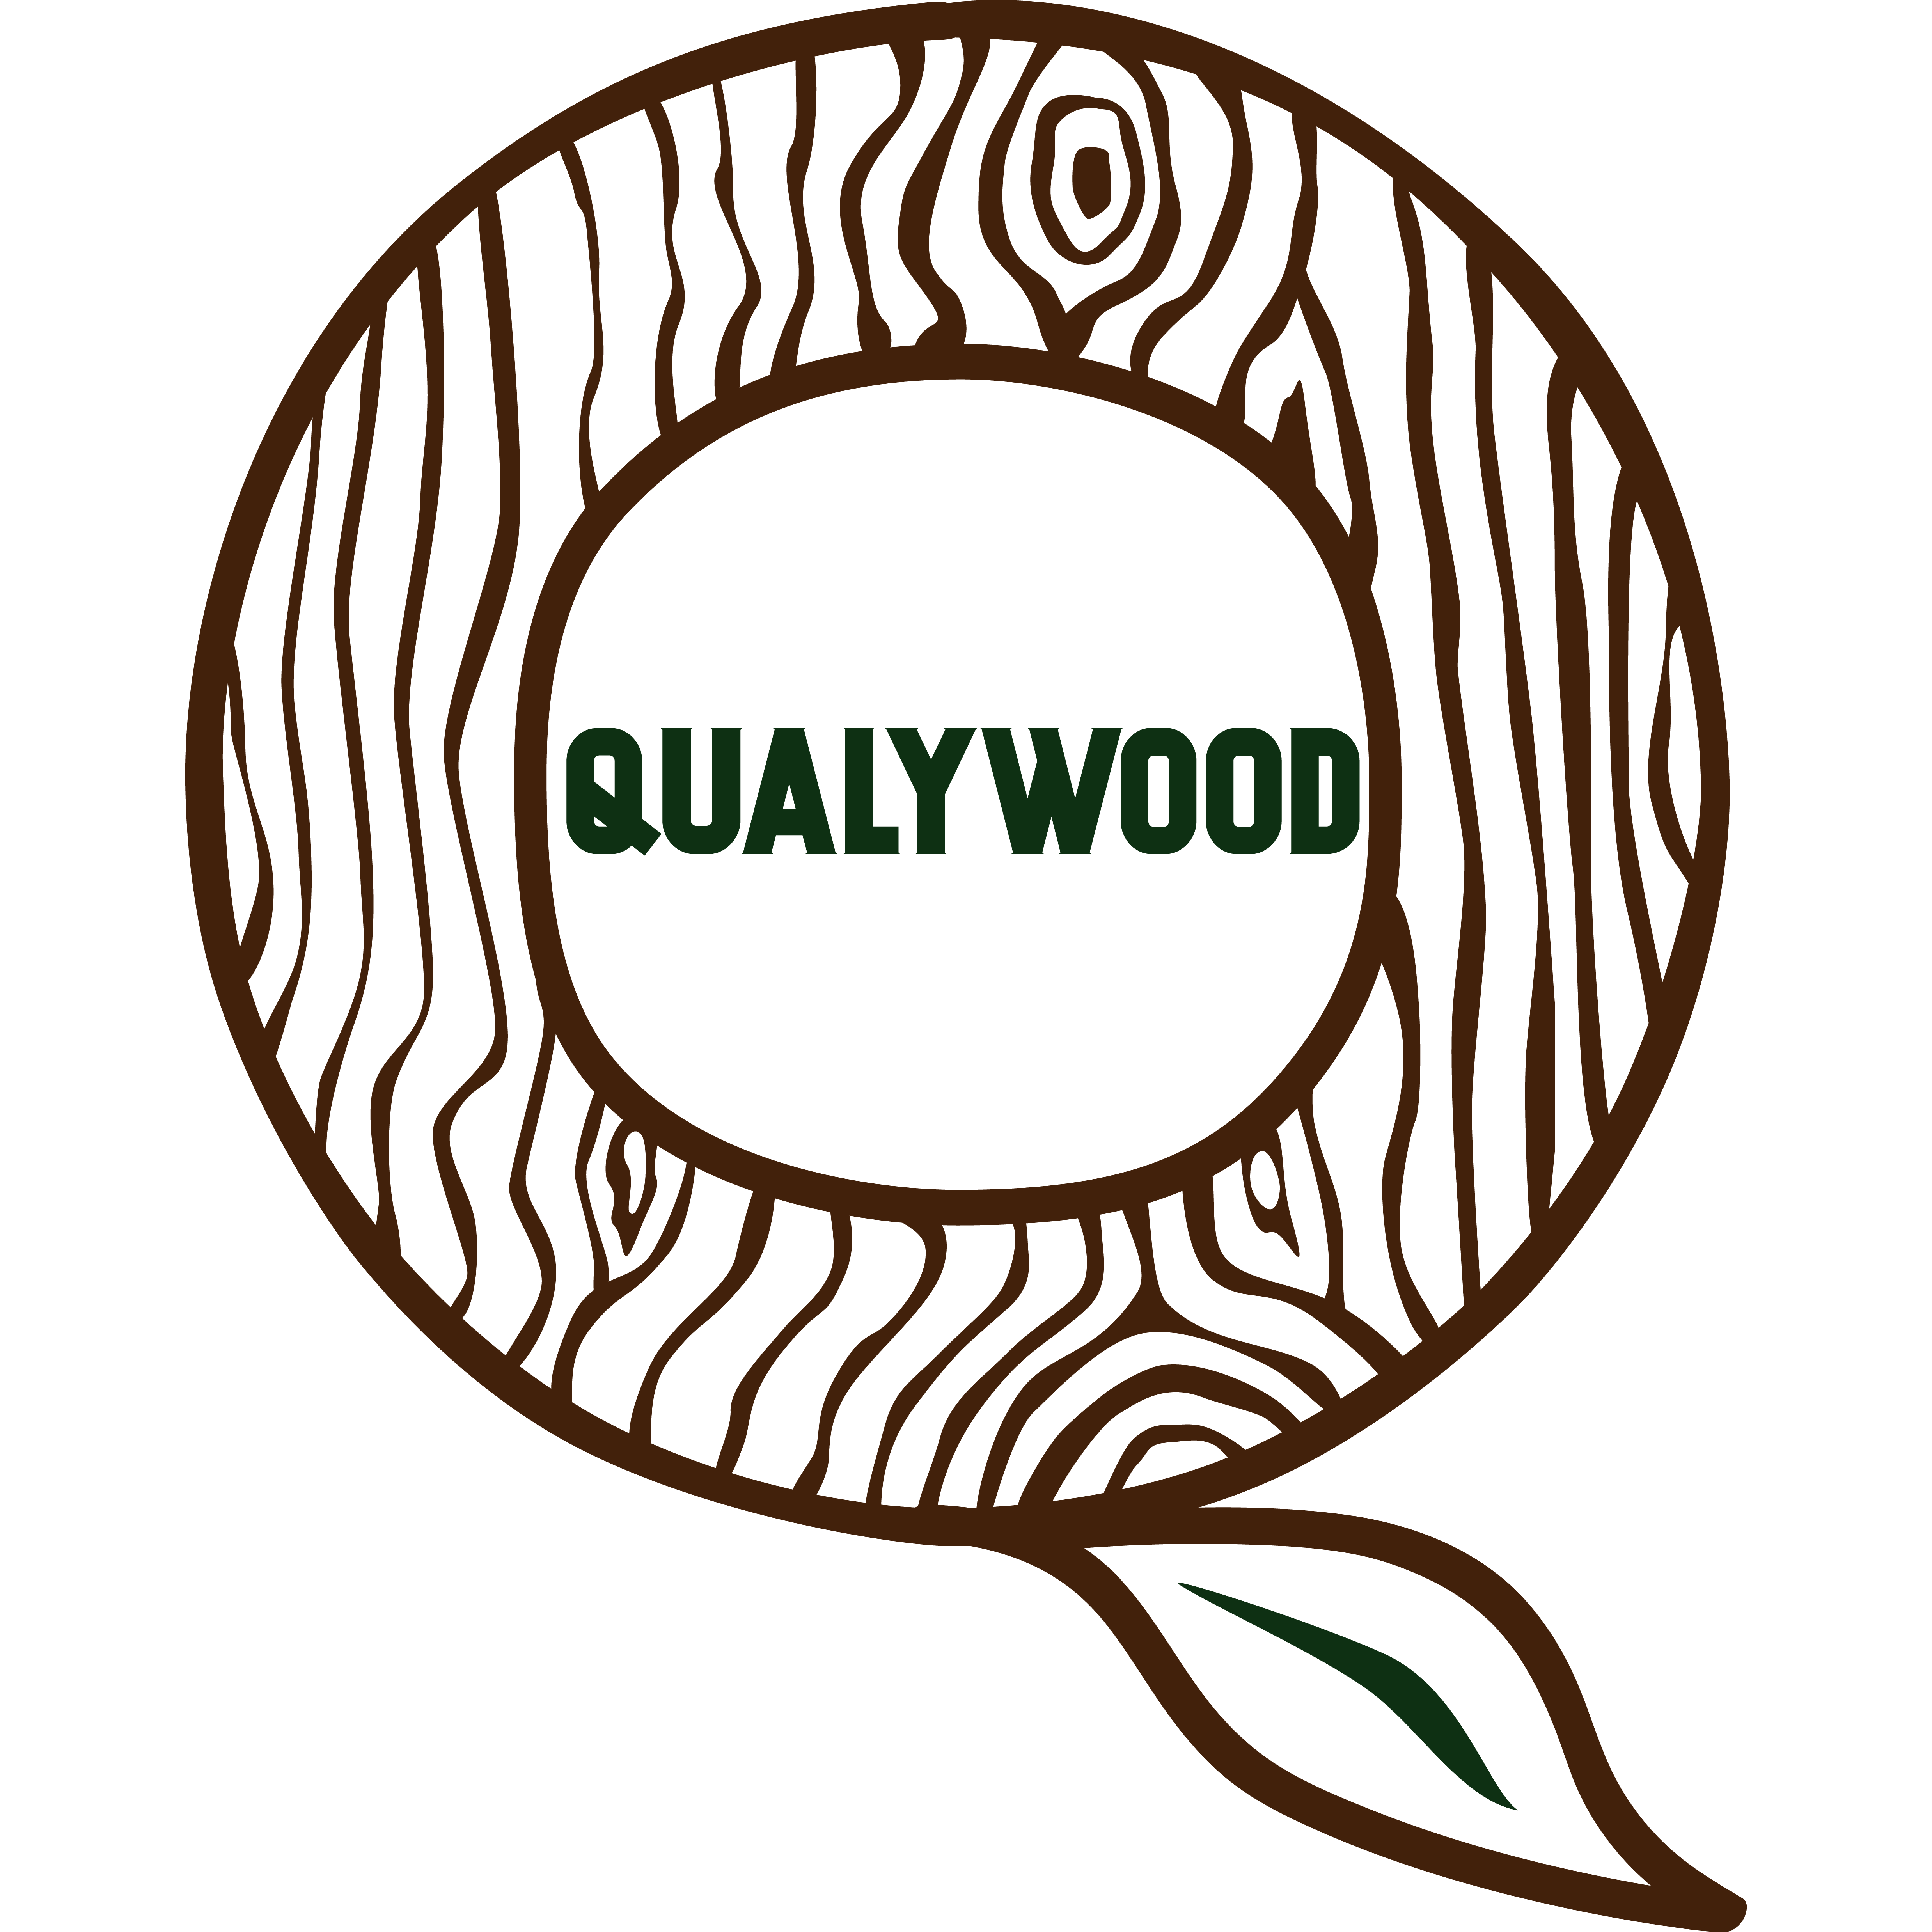 Qualywood